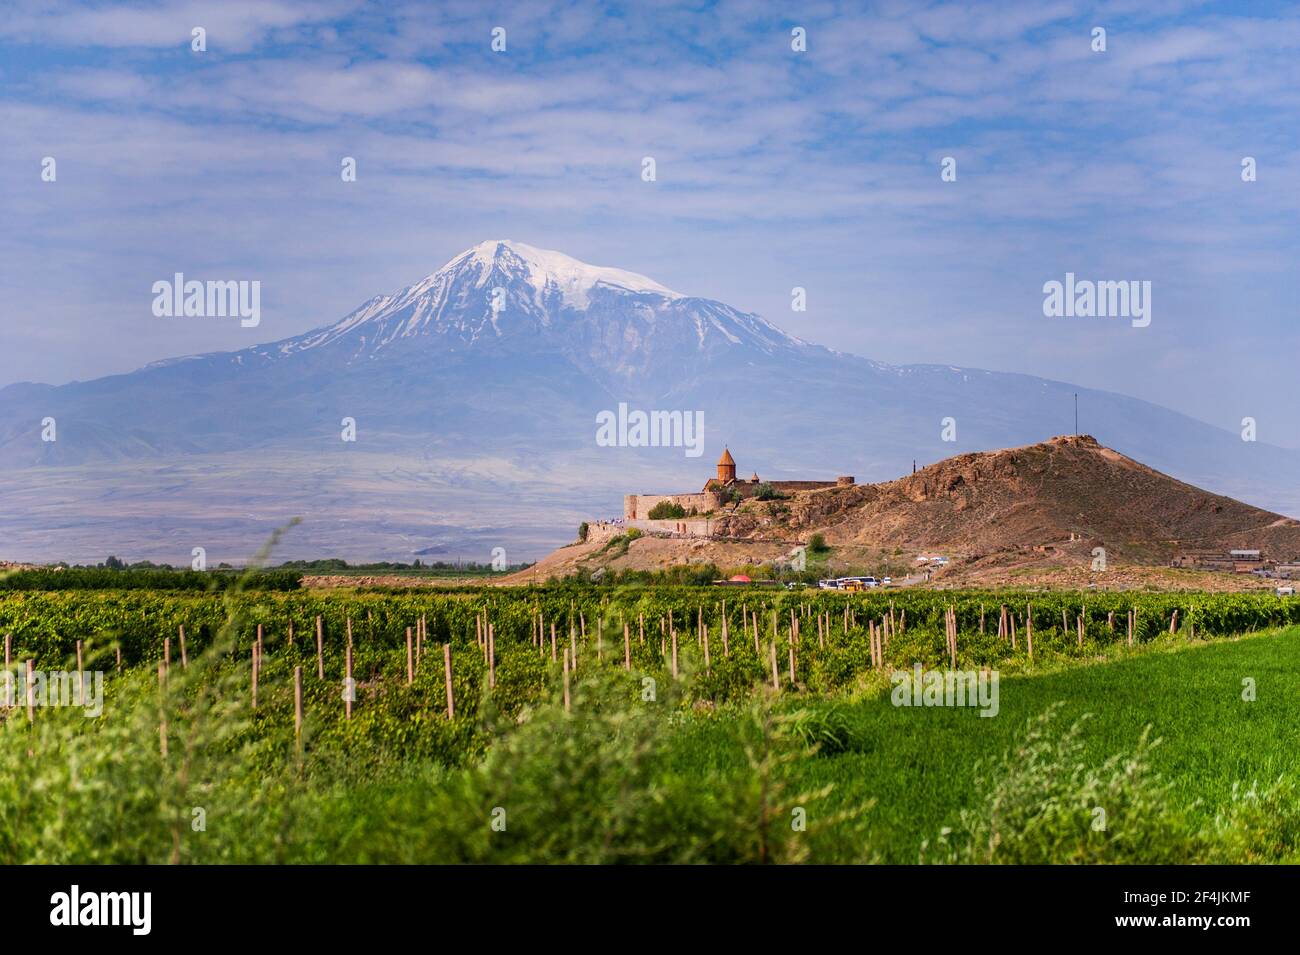 Khor Virap, Armenia - Lujy 5, 2018: Khor Virap monastery and the Biblical mount Ararat in Armenia Stock Photo